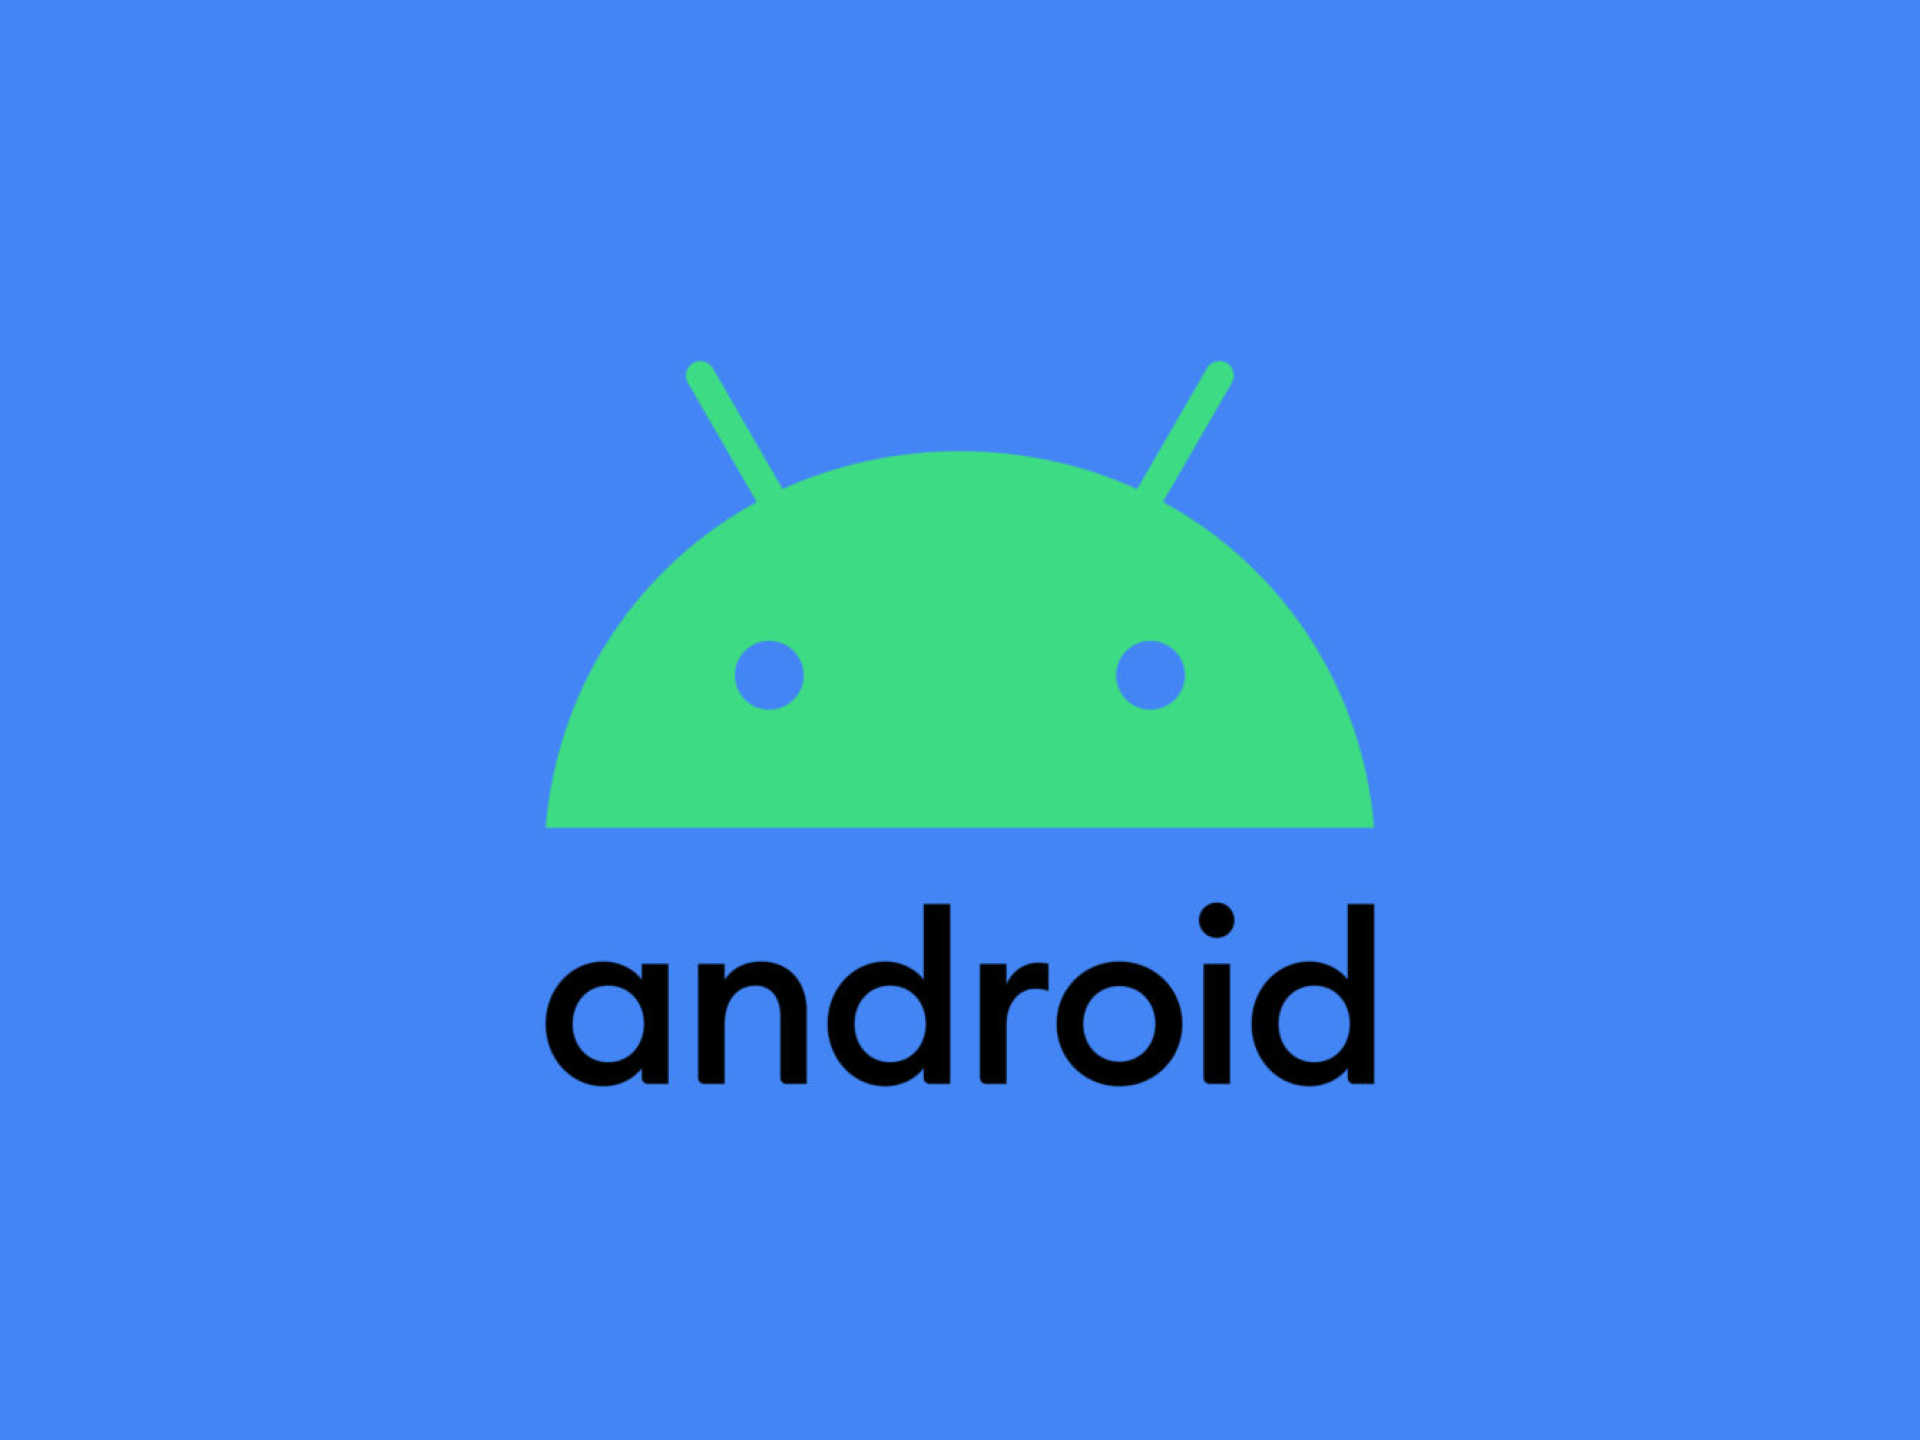 Come Avere i Tasti Virtuali Home, Indietro e Panoramica su Android  --- (Fonte immagine: https://img.tuttoandroid.net/wp-content/uploads/2019/08/Android-nuovo-logo.png)